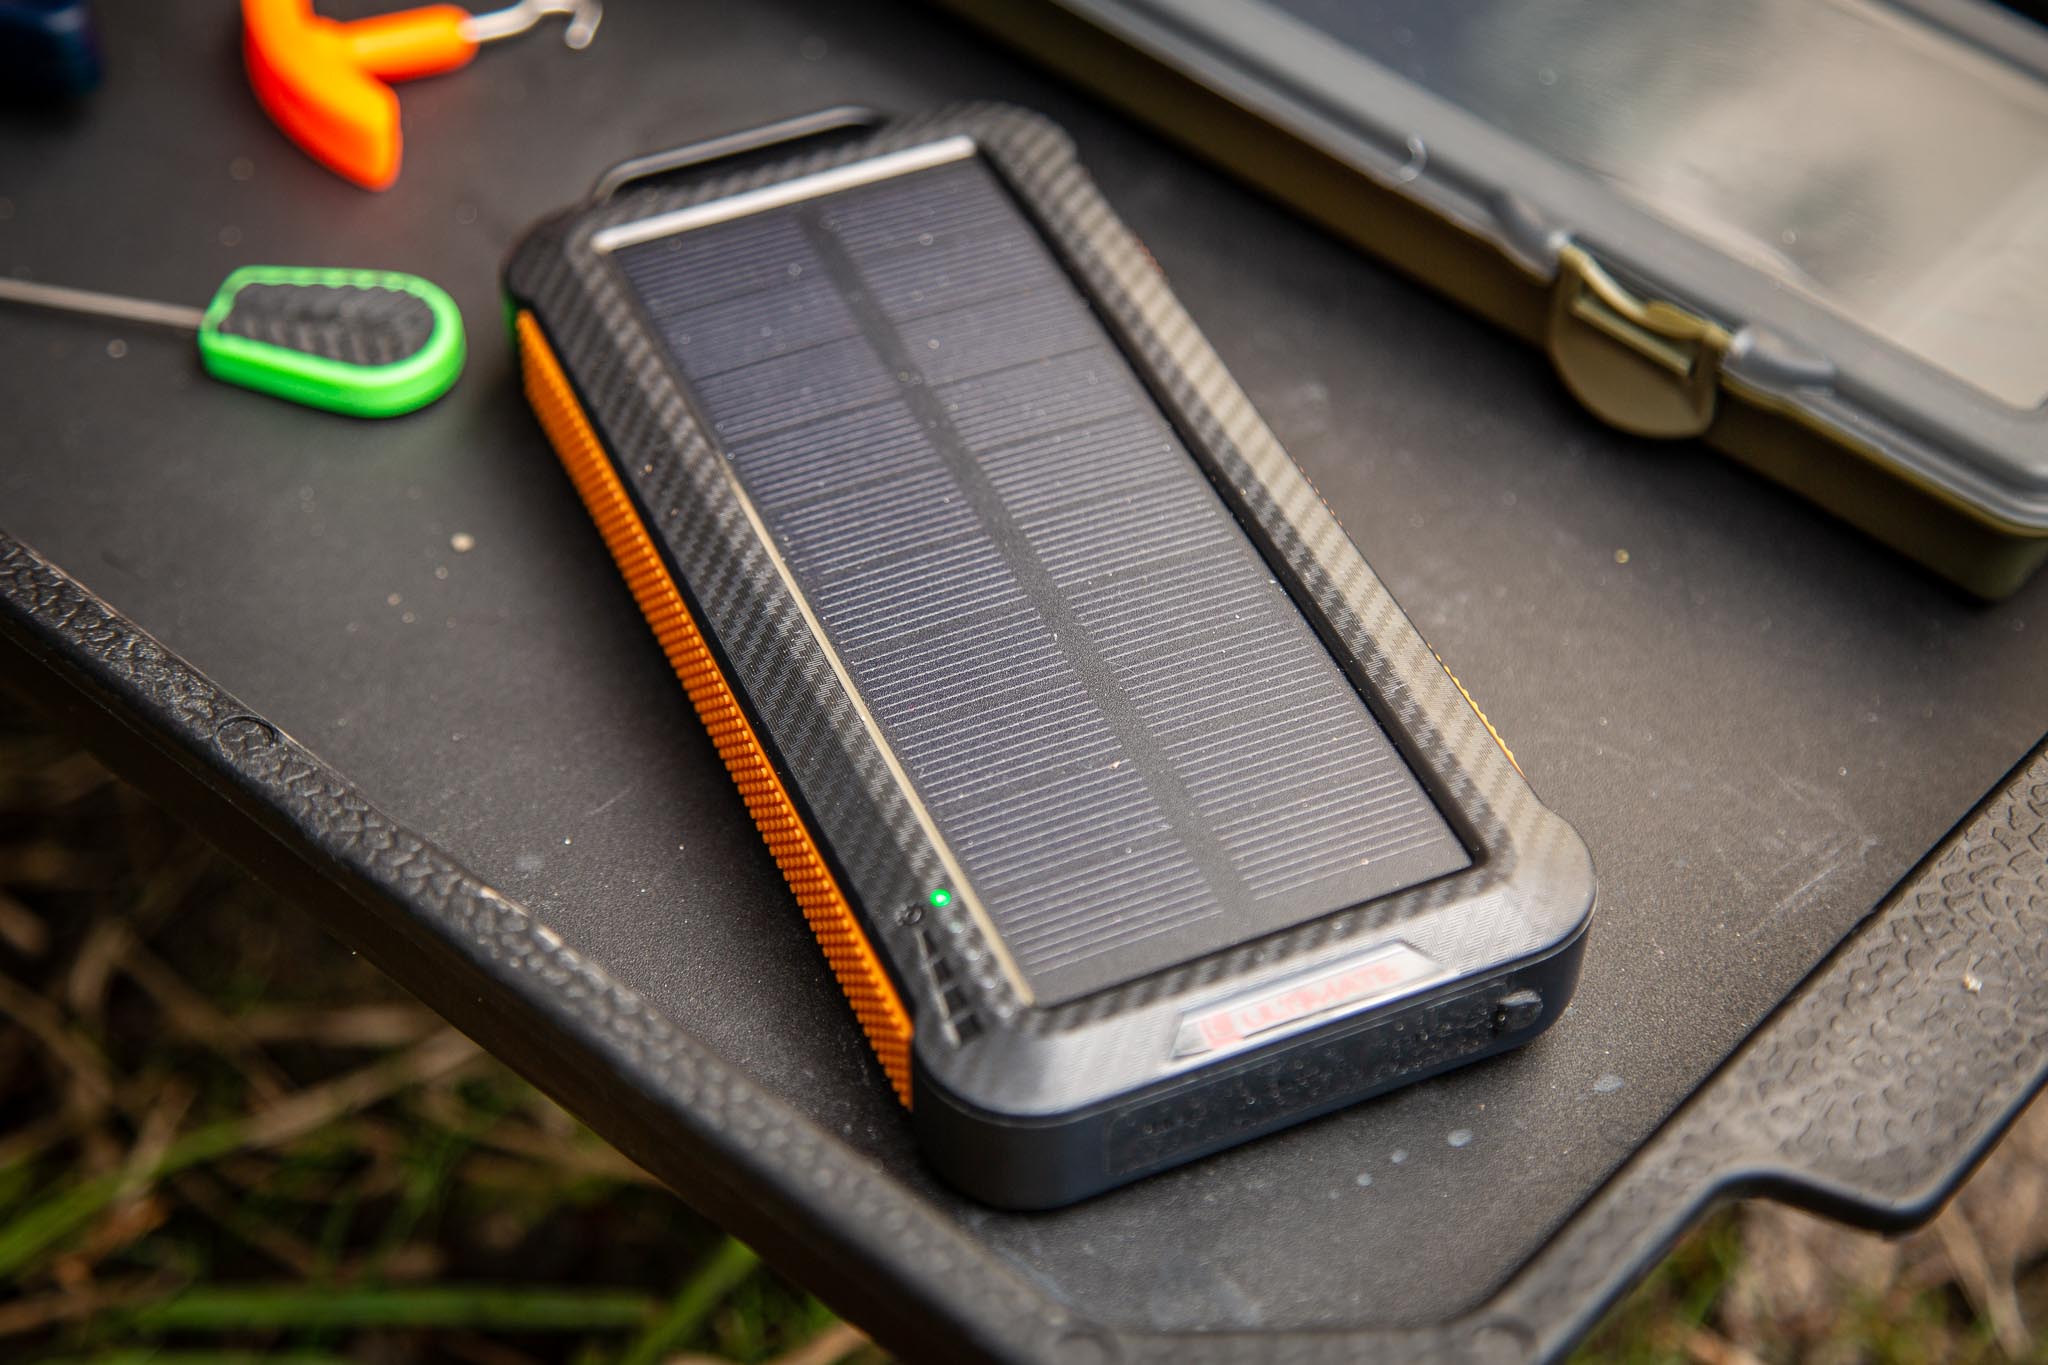 Batterie Portative Solaire Ultimate Explora 10.000 mAh